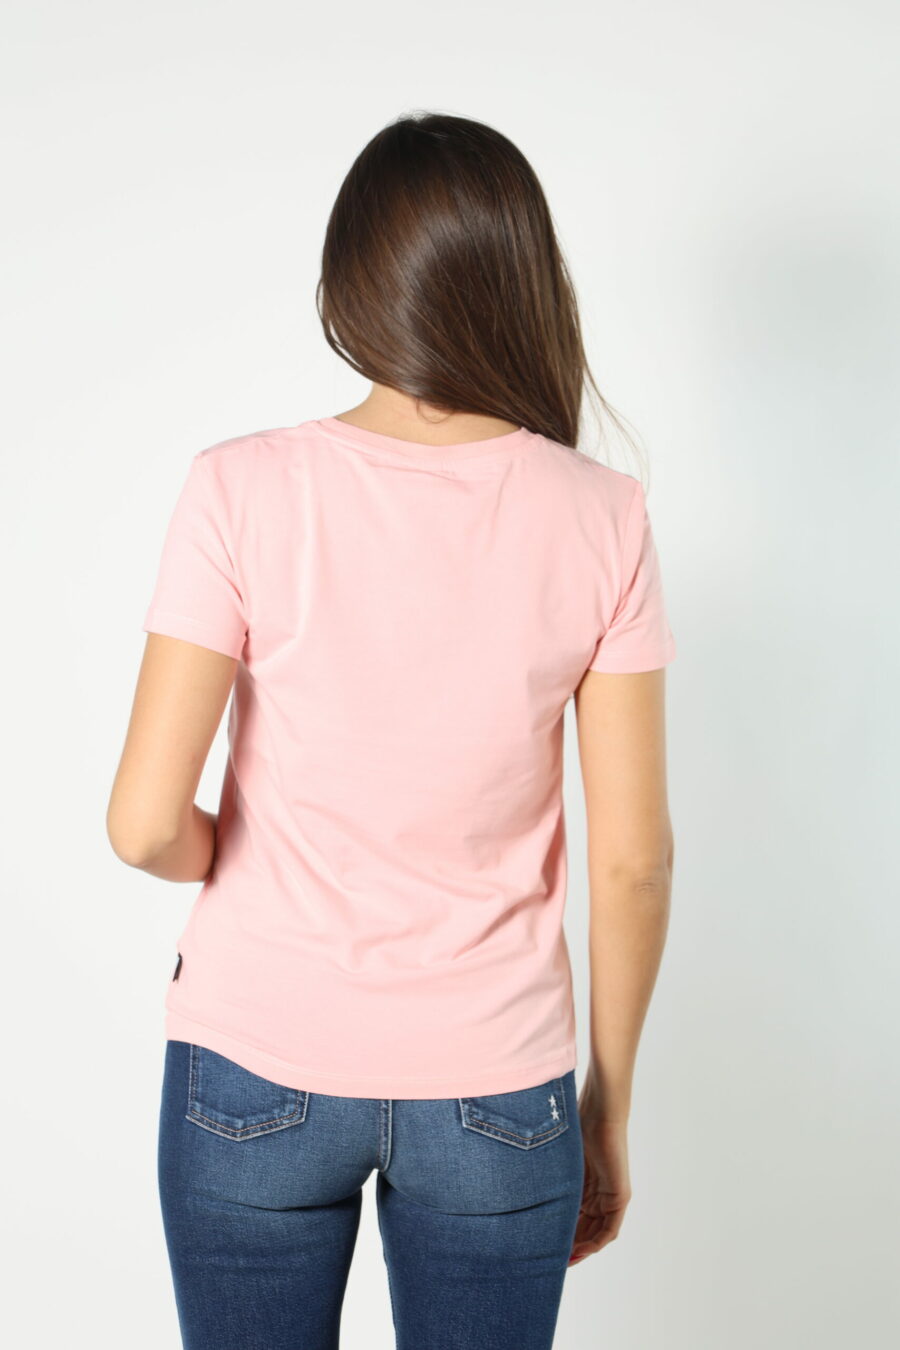 Rosa T-Shirt mit Bärenlogo-Aufnäher "underbear" - 8052865435499 323 skaliert